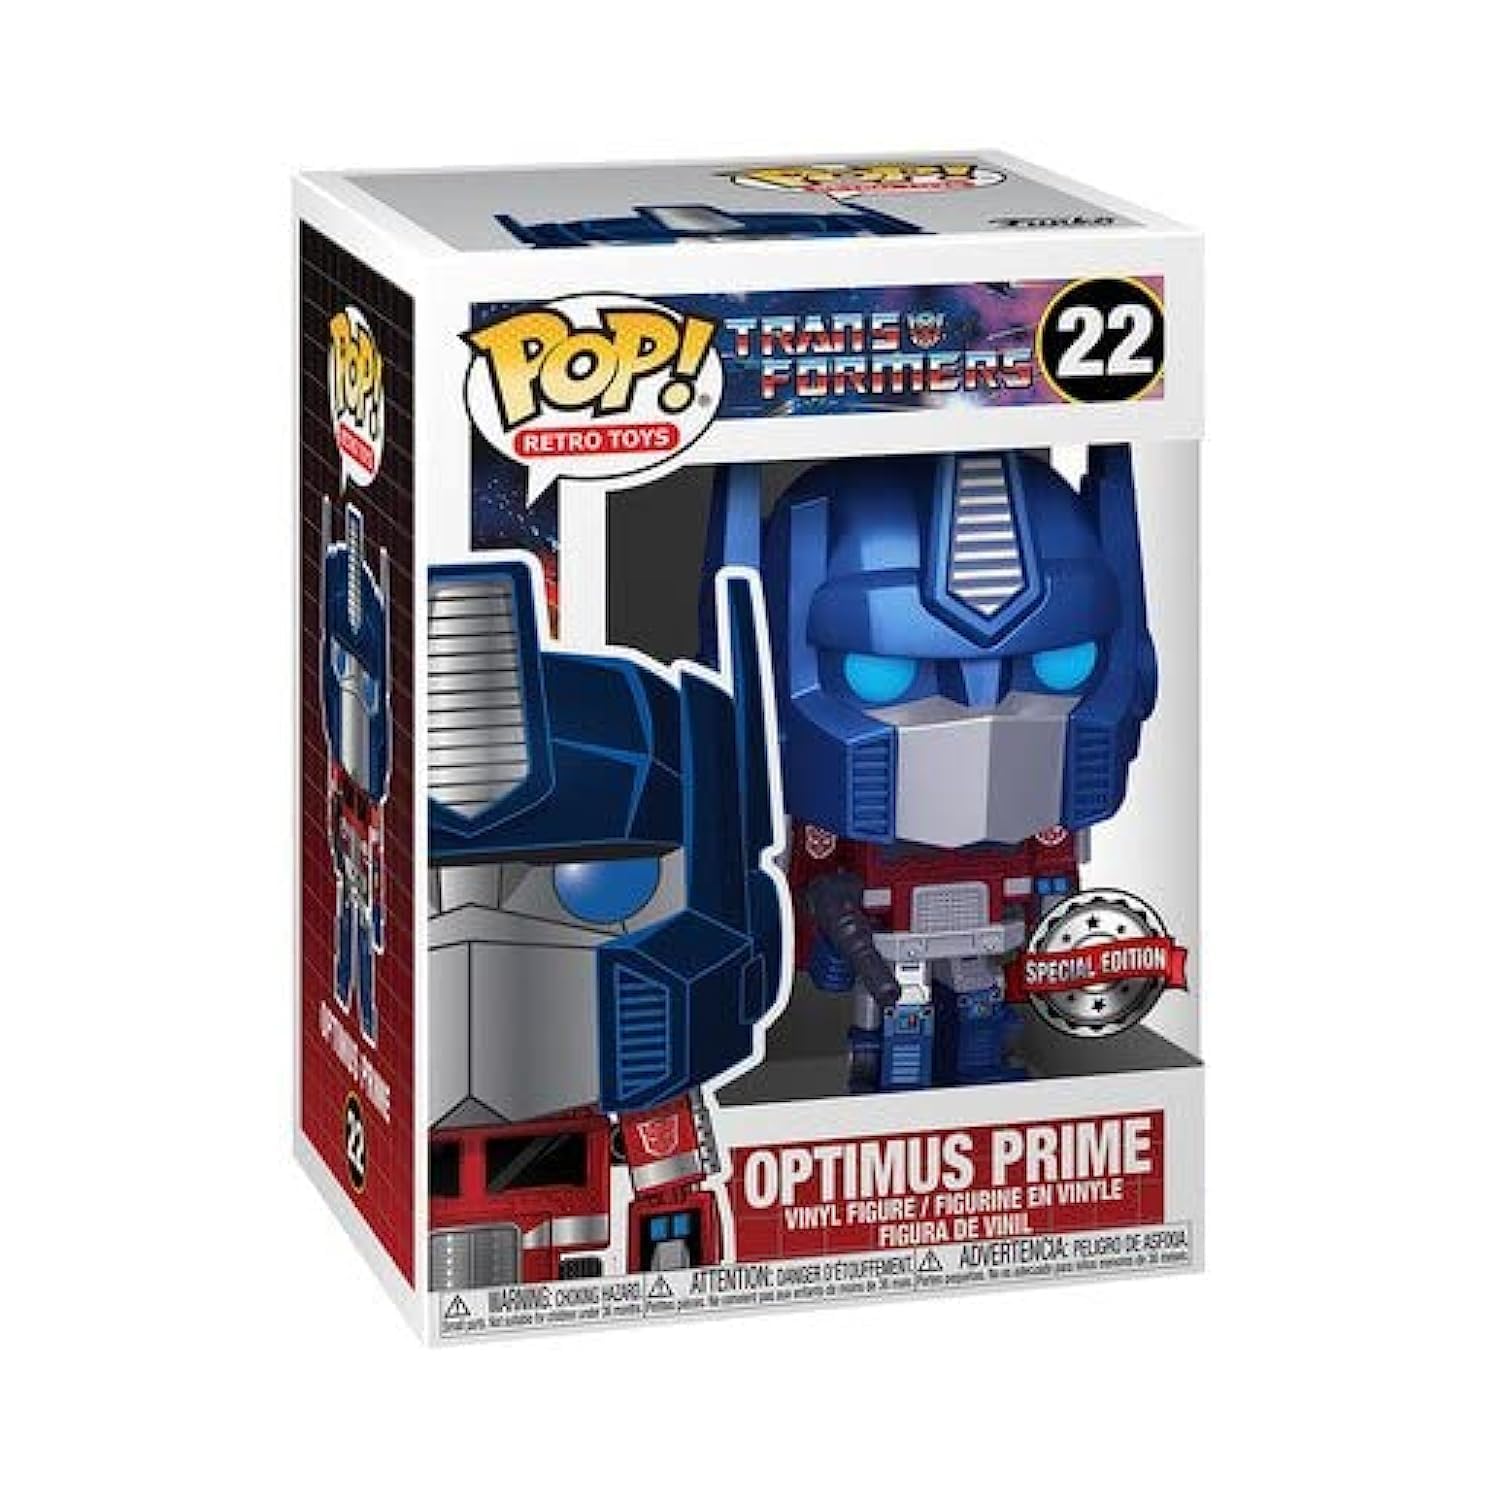 $4.99 (Prime Members): Funko Pop! Retro Toys: Transformers Metallic Optimus Prime